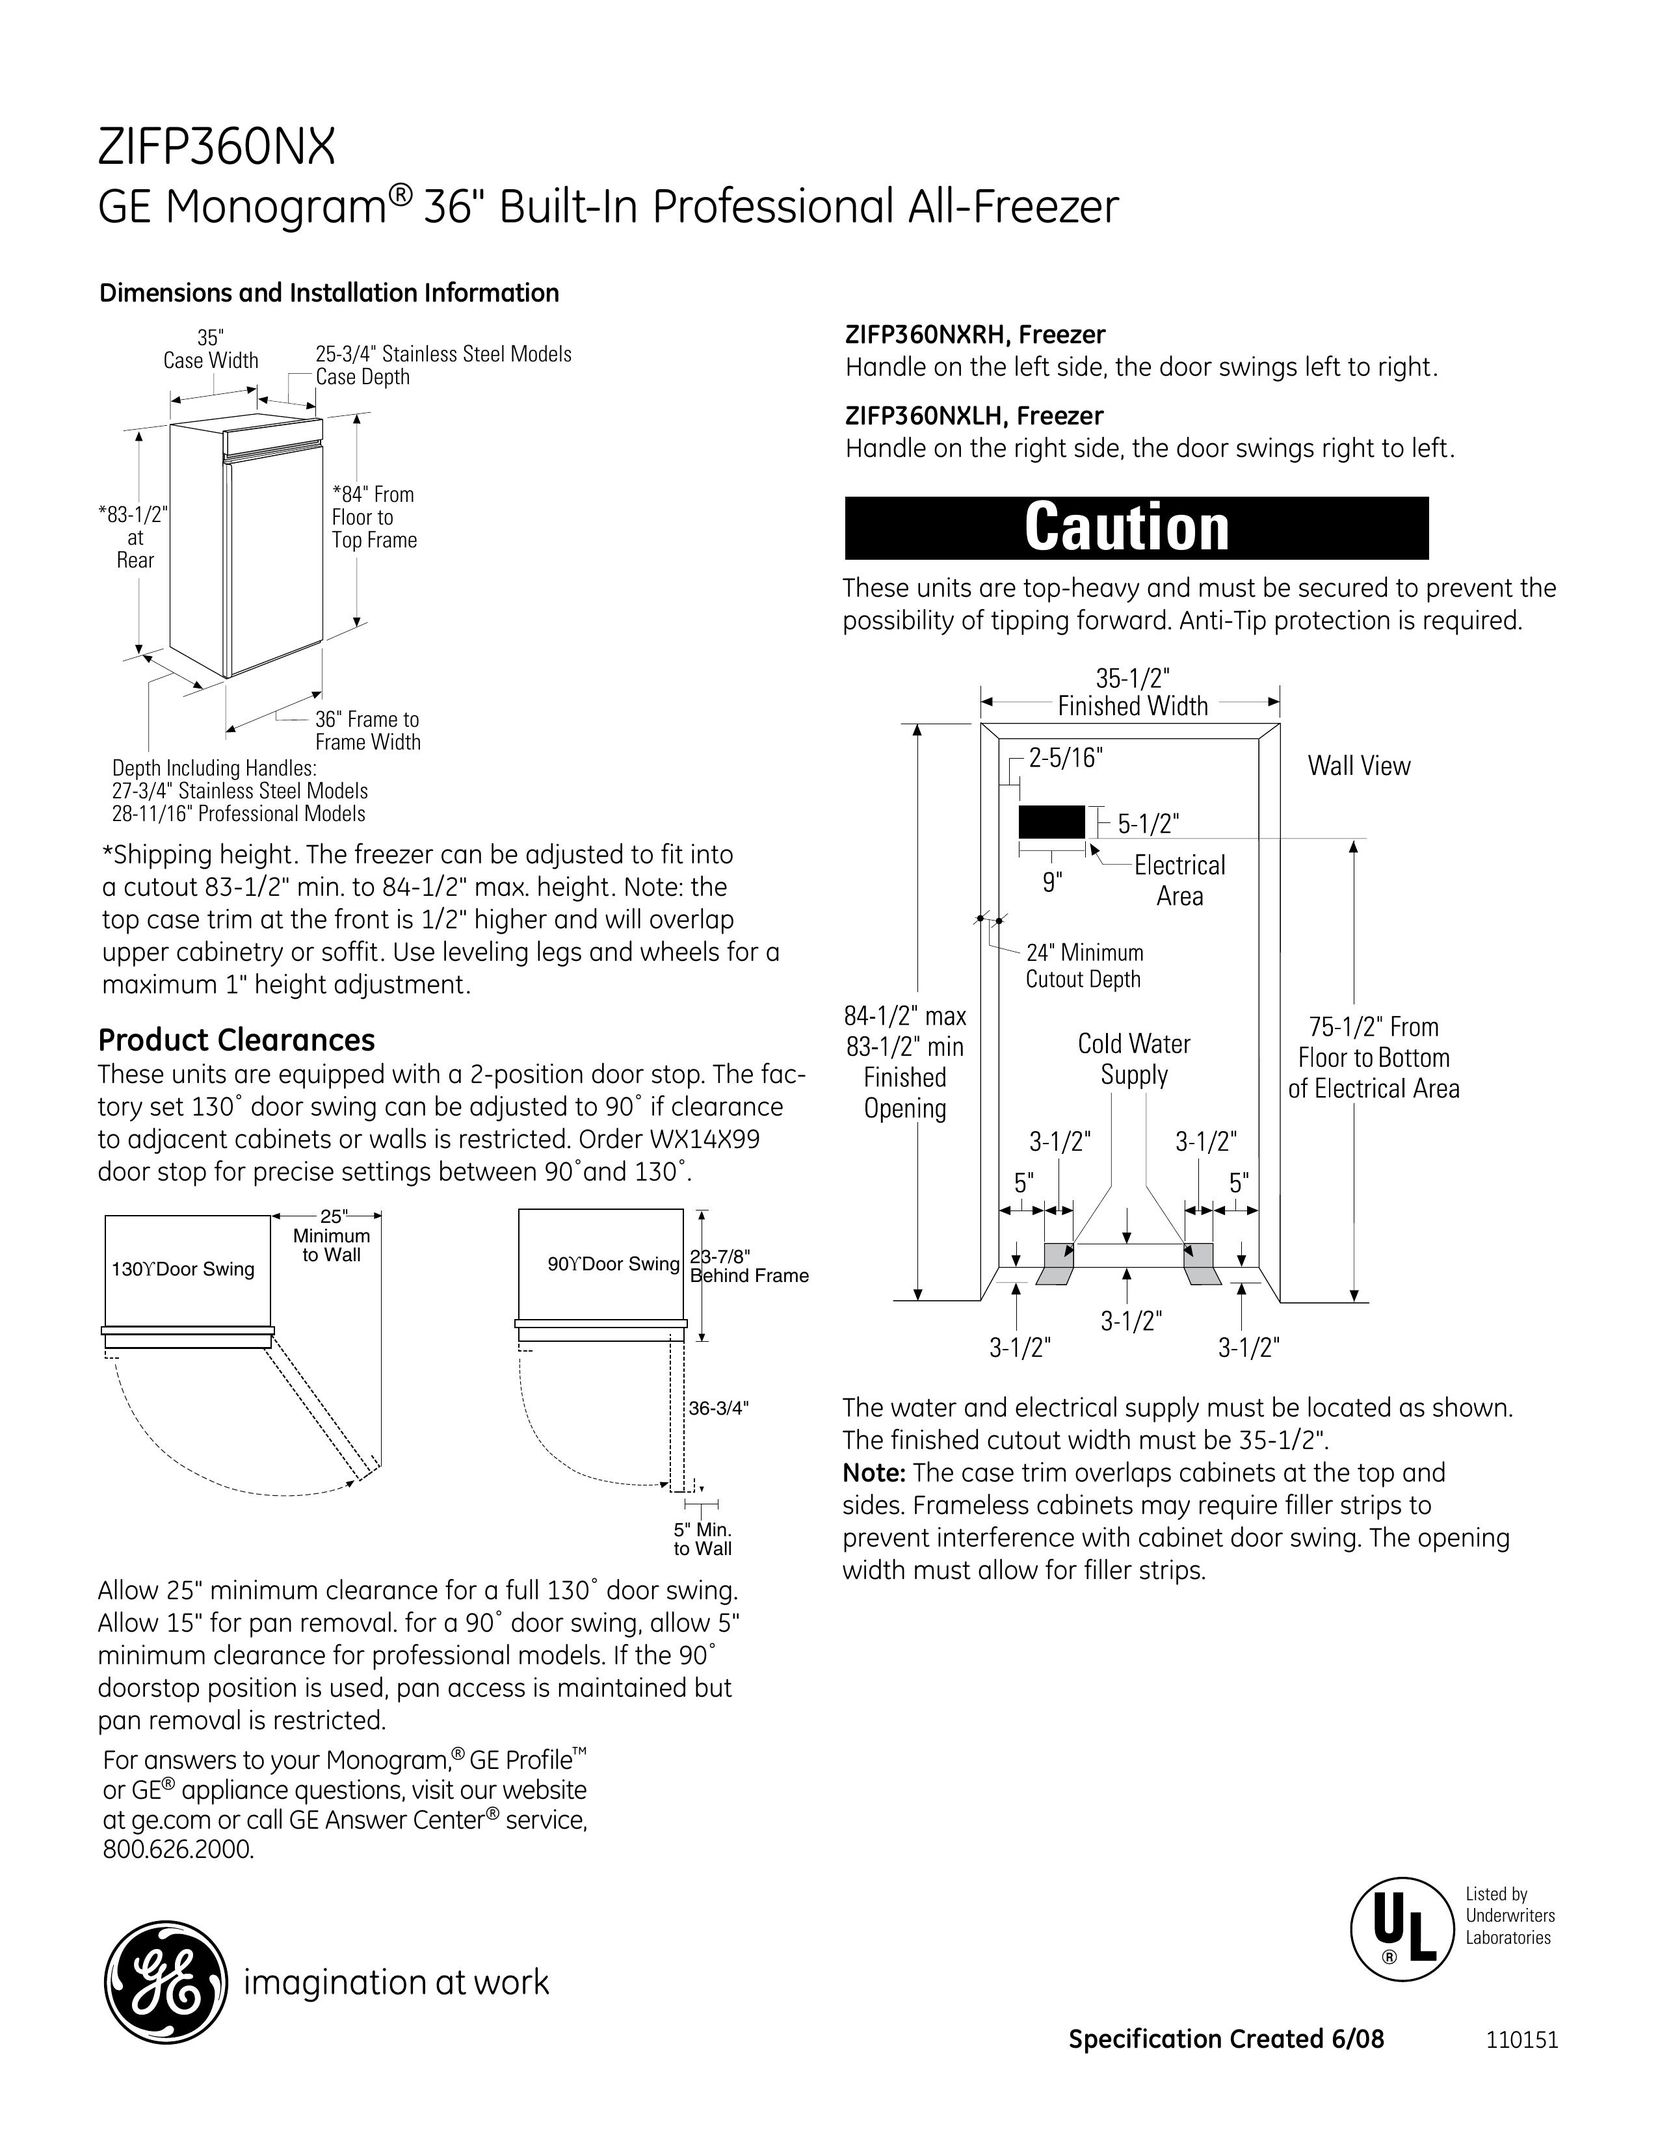 GE Monogram ZIFP360NX Freezer User Manual